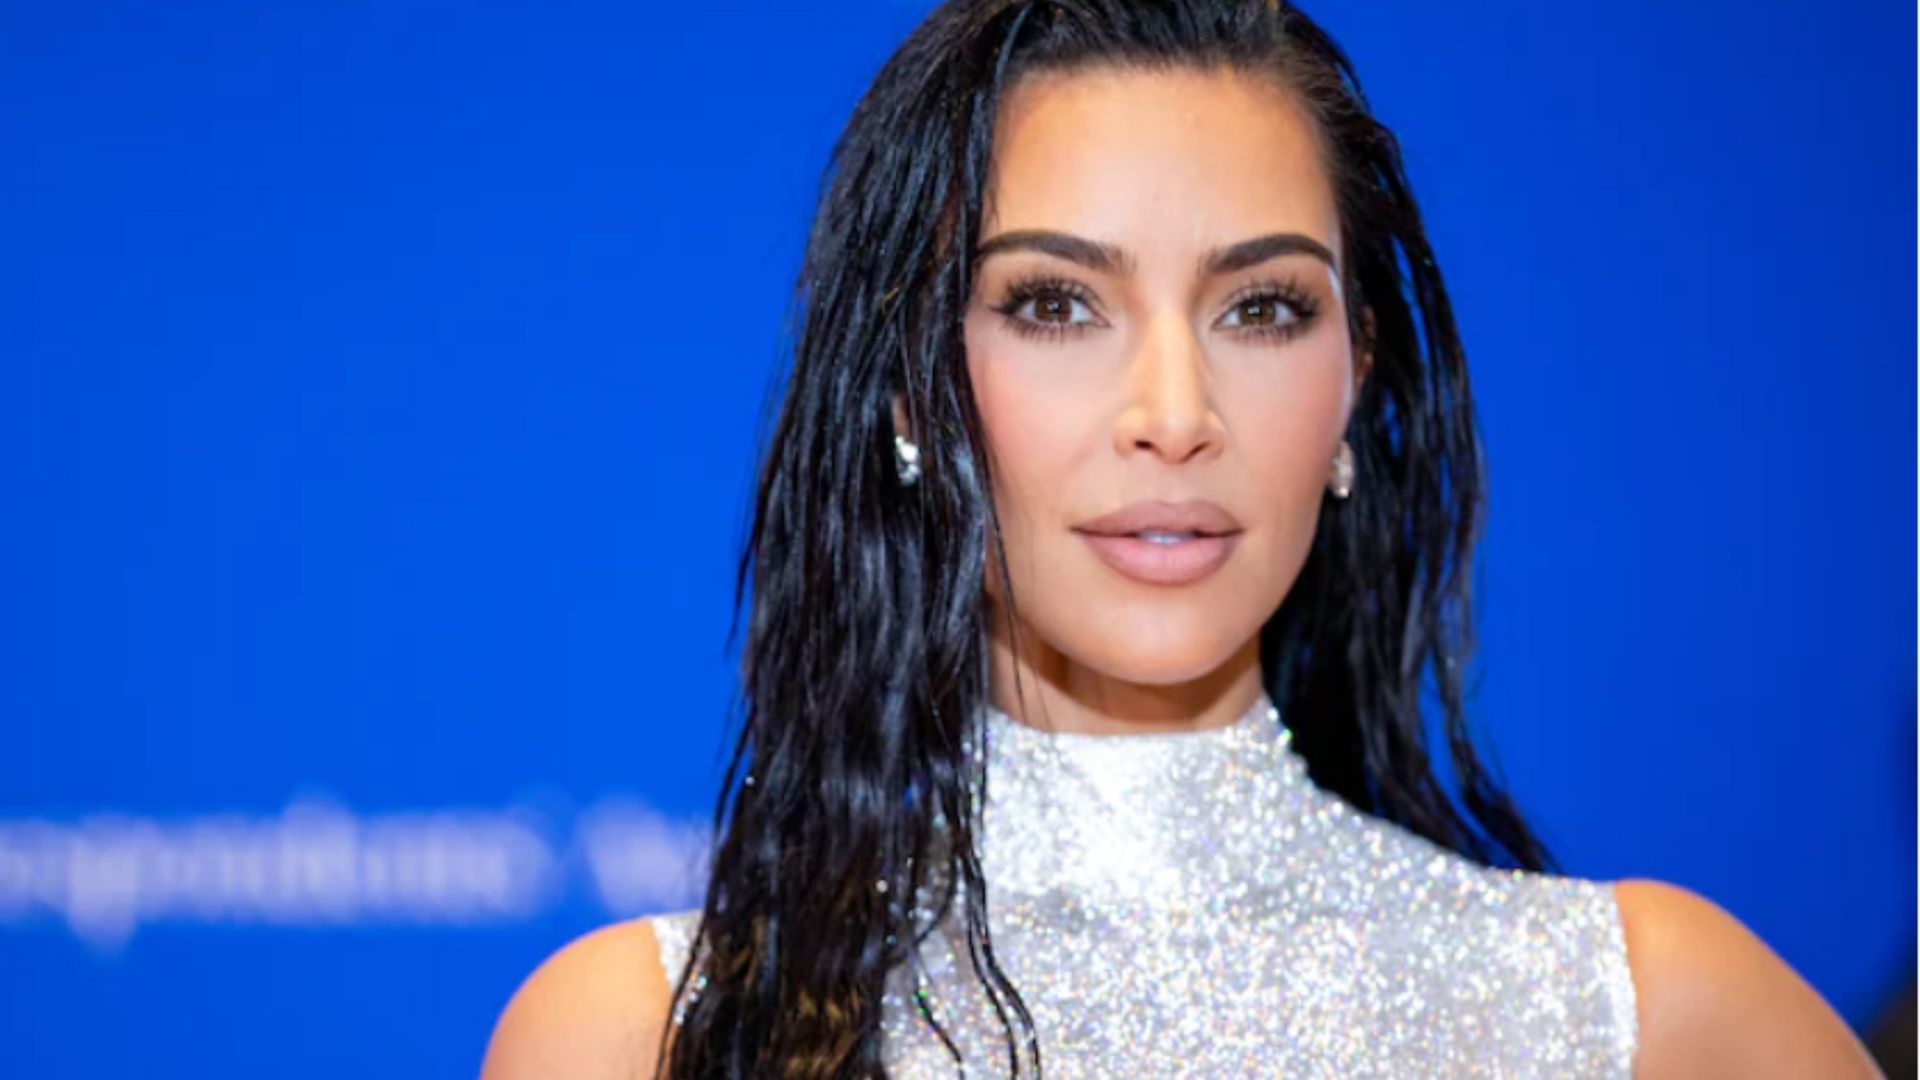 Kim Kardashian 're-evaluating' Balenciaga relationship over kid images